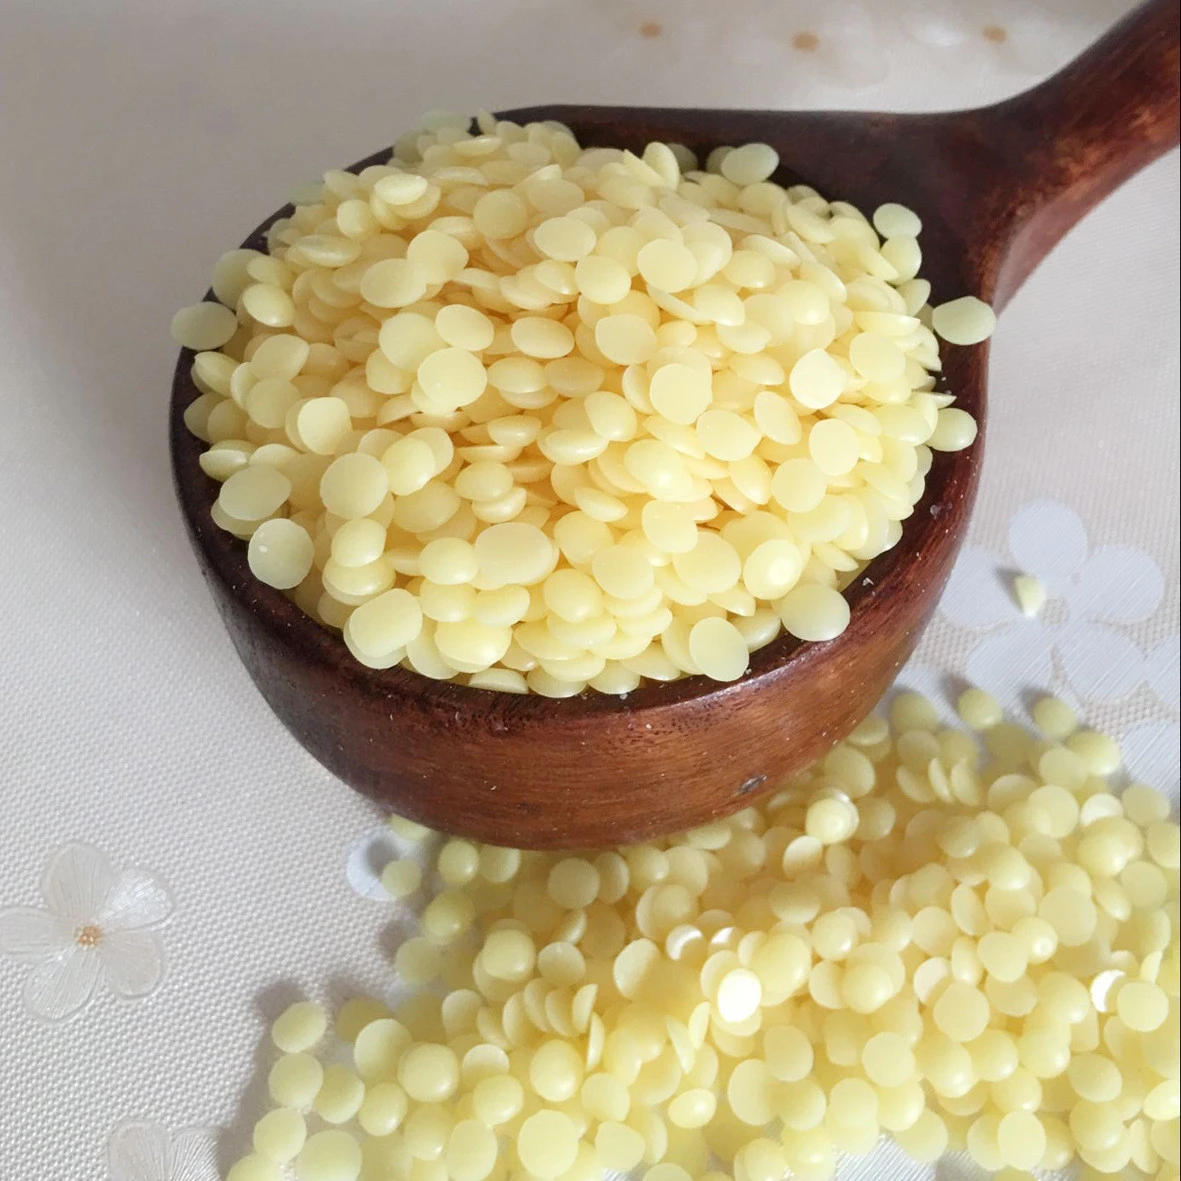 Food Grade 100% Pure Organic Pellets bees wax for candle making Bee Wax Natural Yellow Beeswax